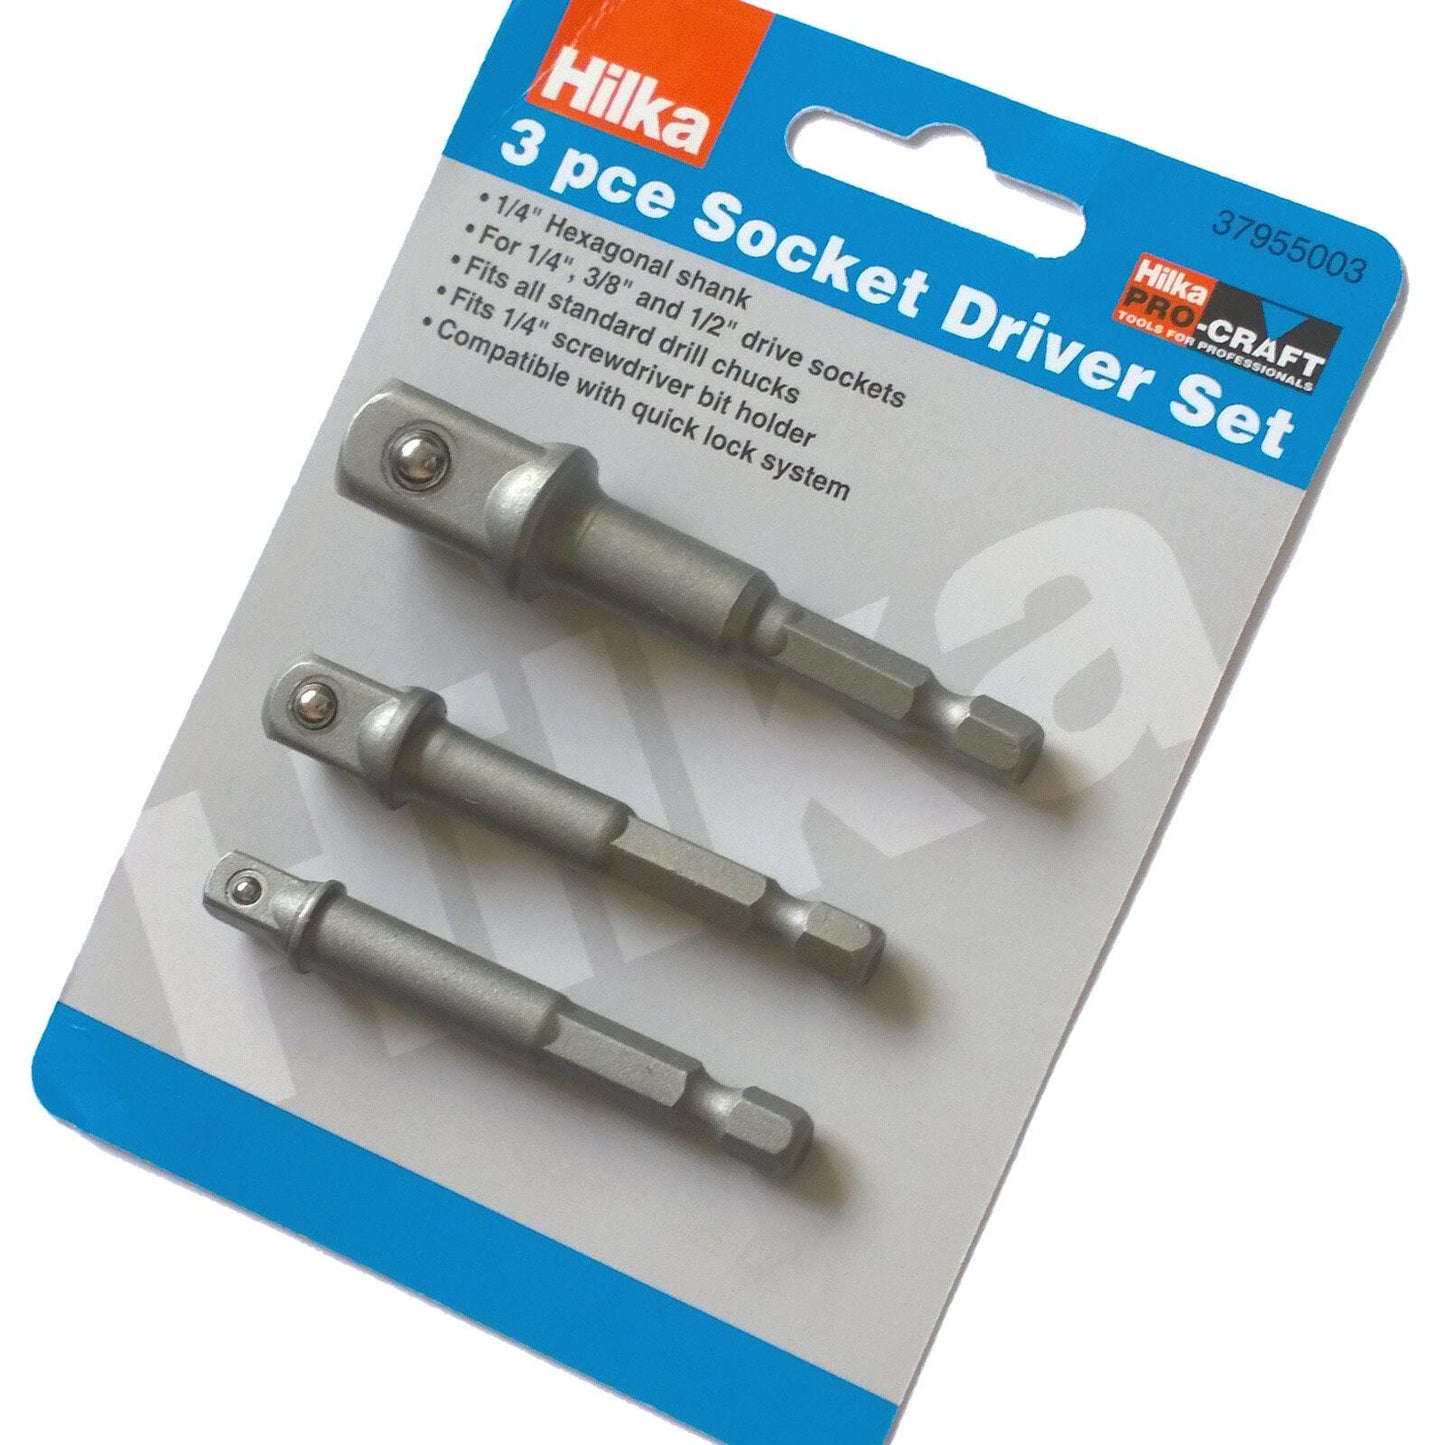 Hilka 3 Piece Drill Socket Adaptor Set Pro Craft 37955003